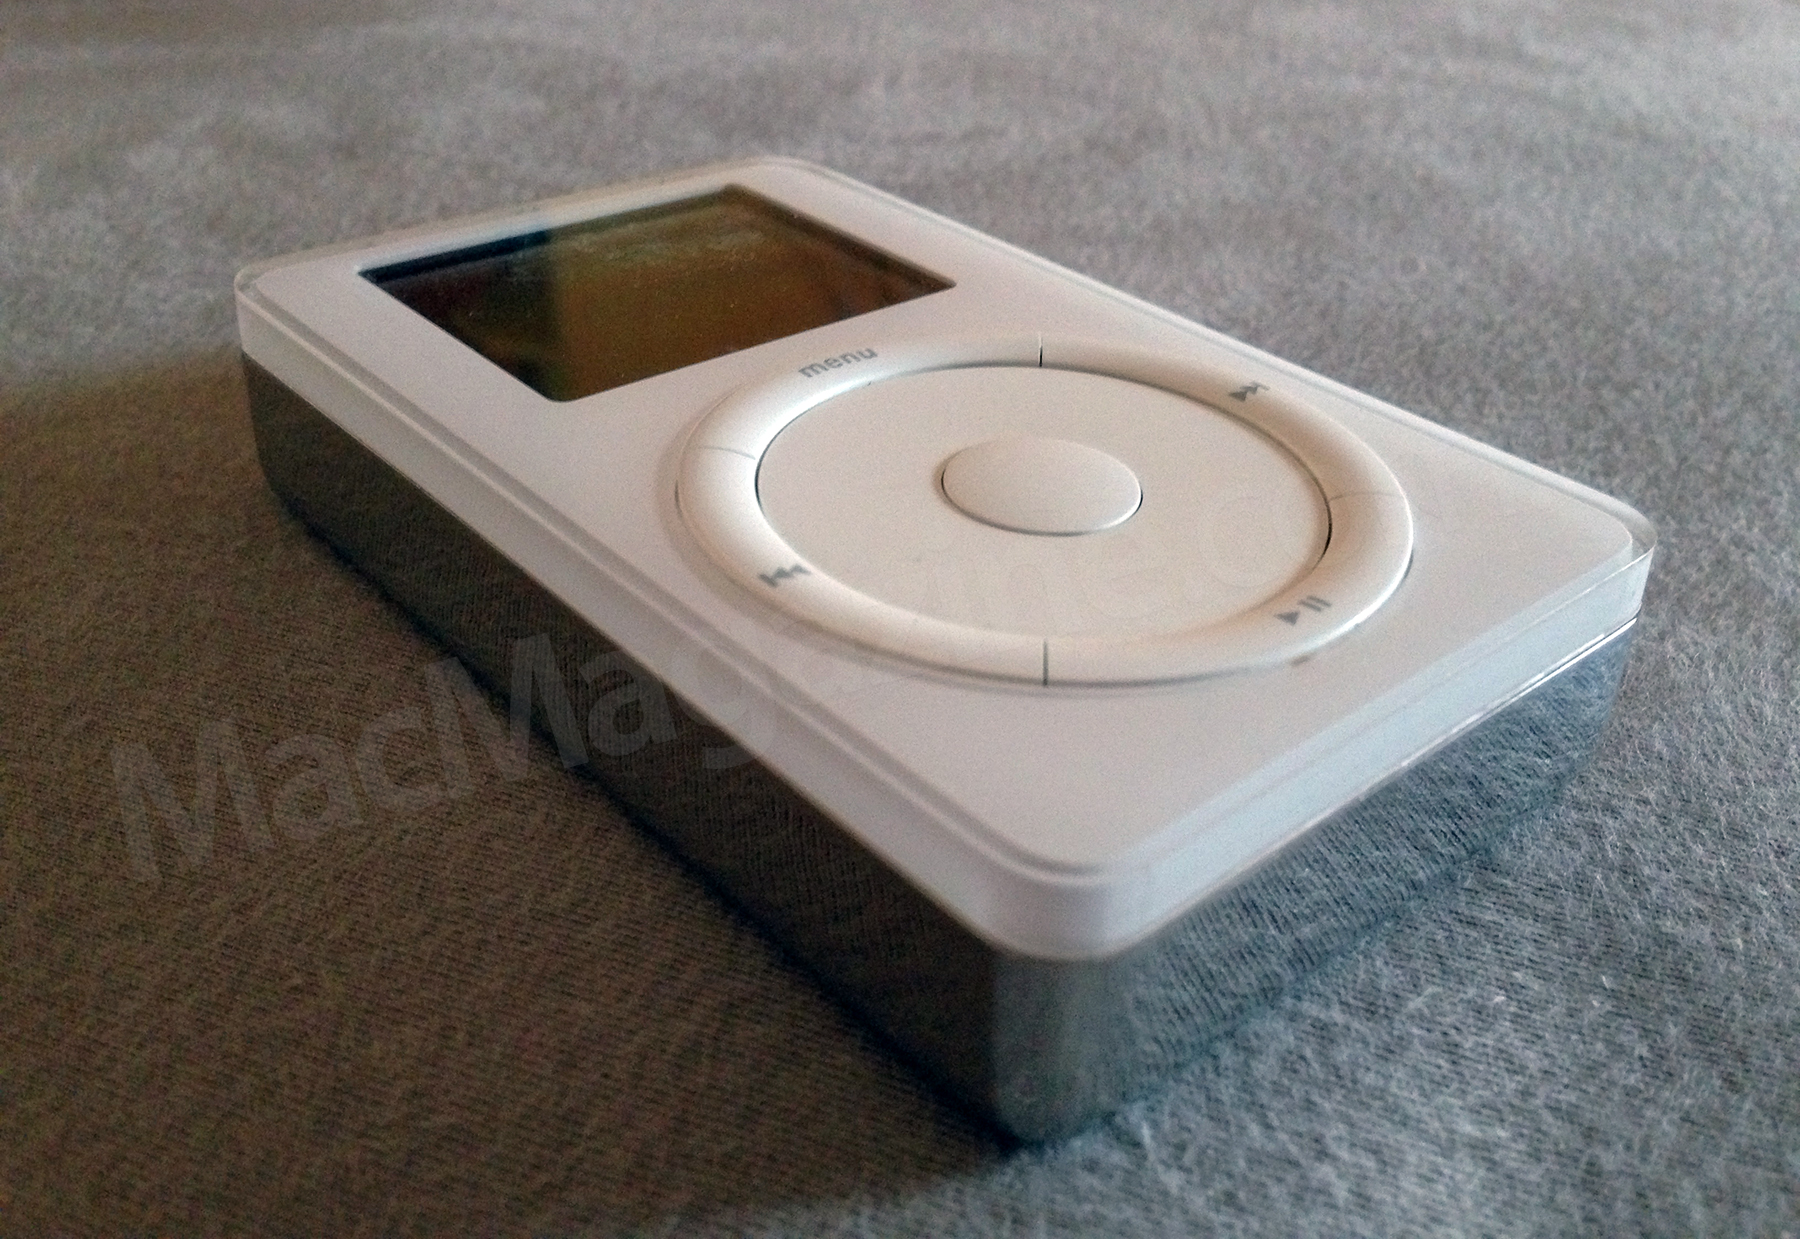 Wilsians iPod الأصلي